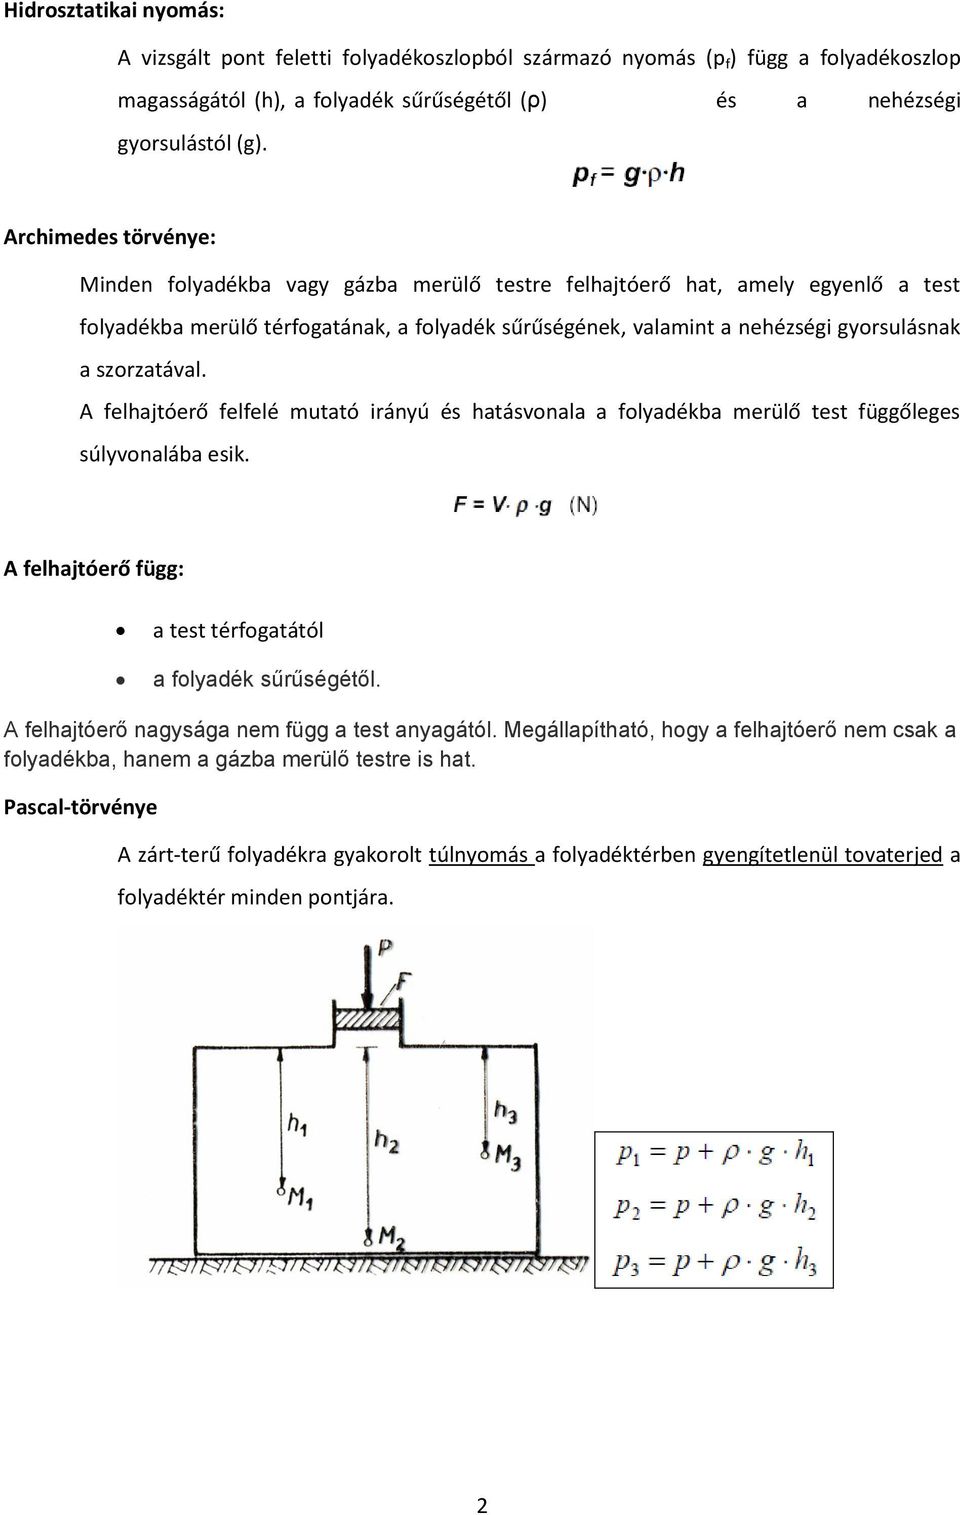 Hidrosztatika. Folyadékok fizikai tulajdonságai - PDF Free Download